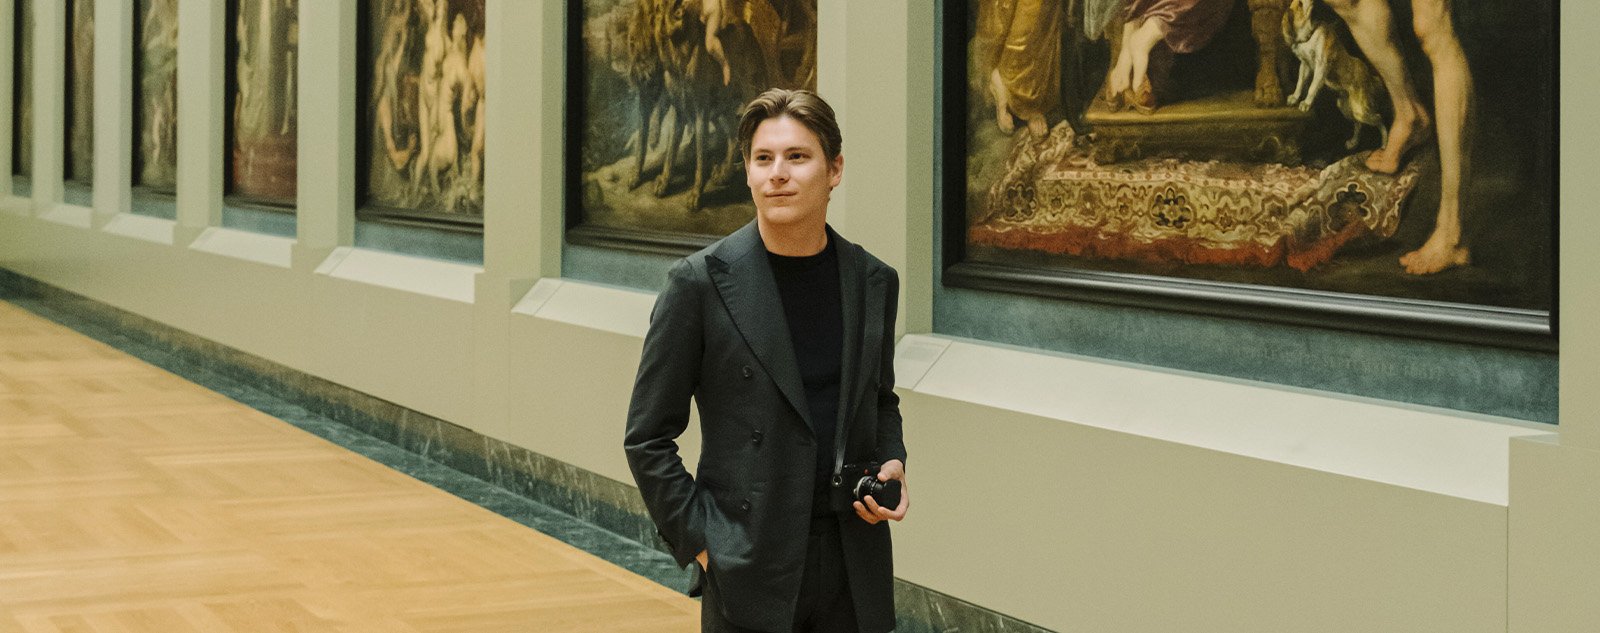 Klaus Mäkelä au Musée du Louvre